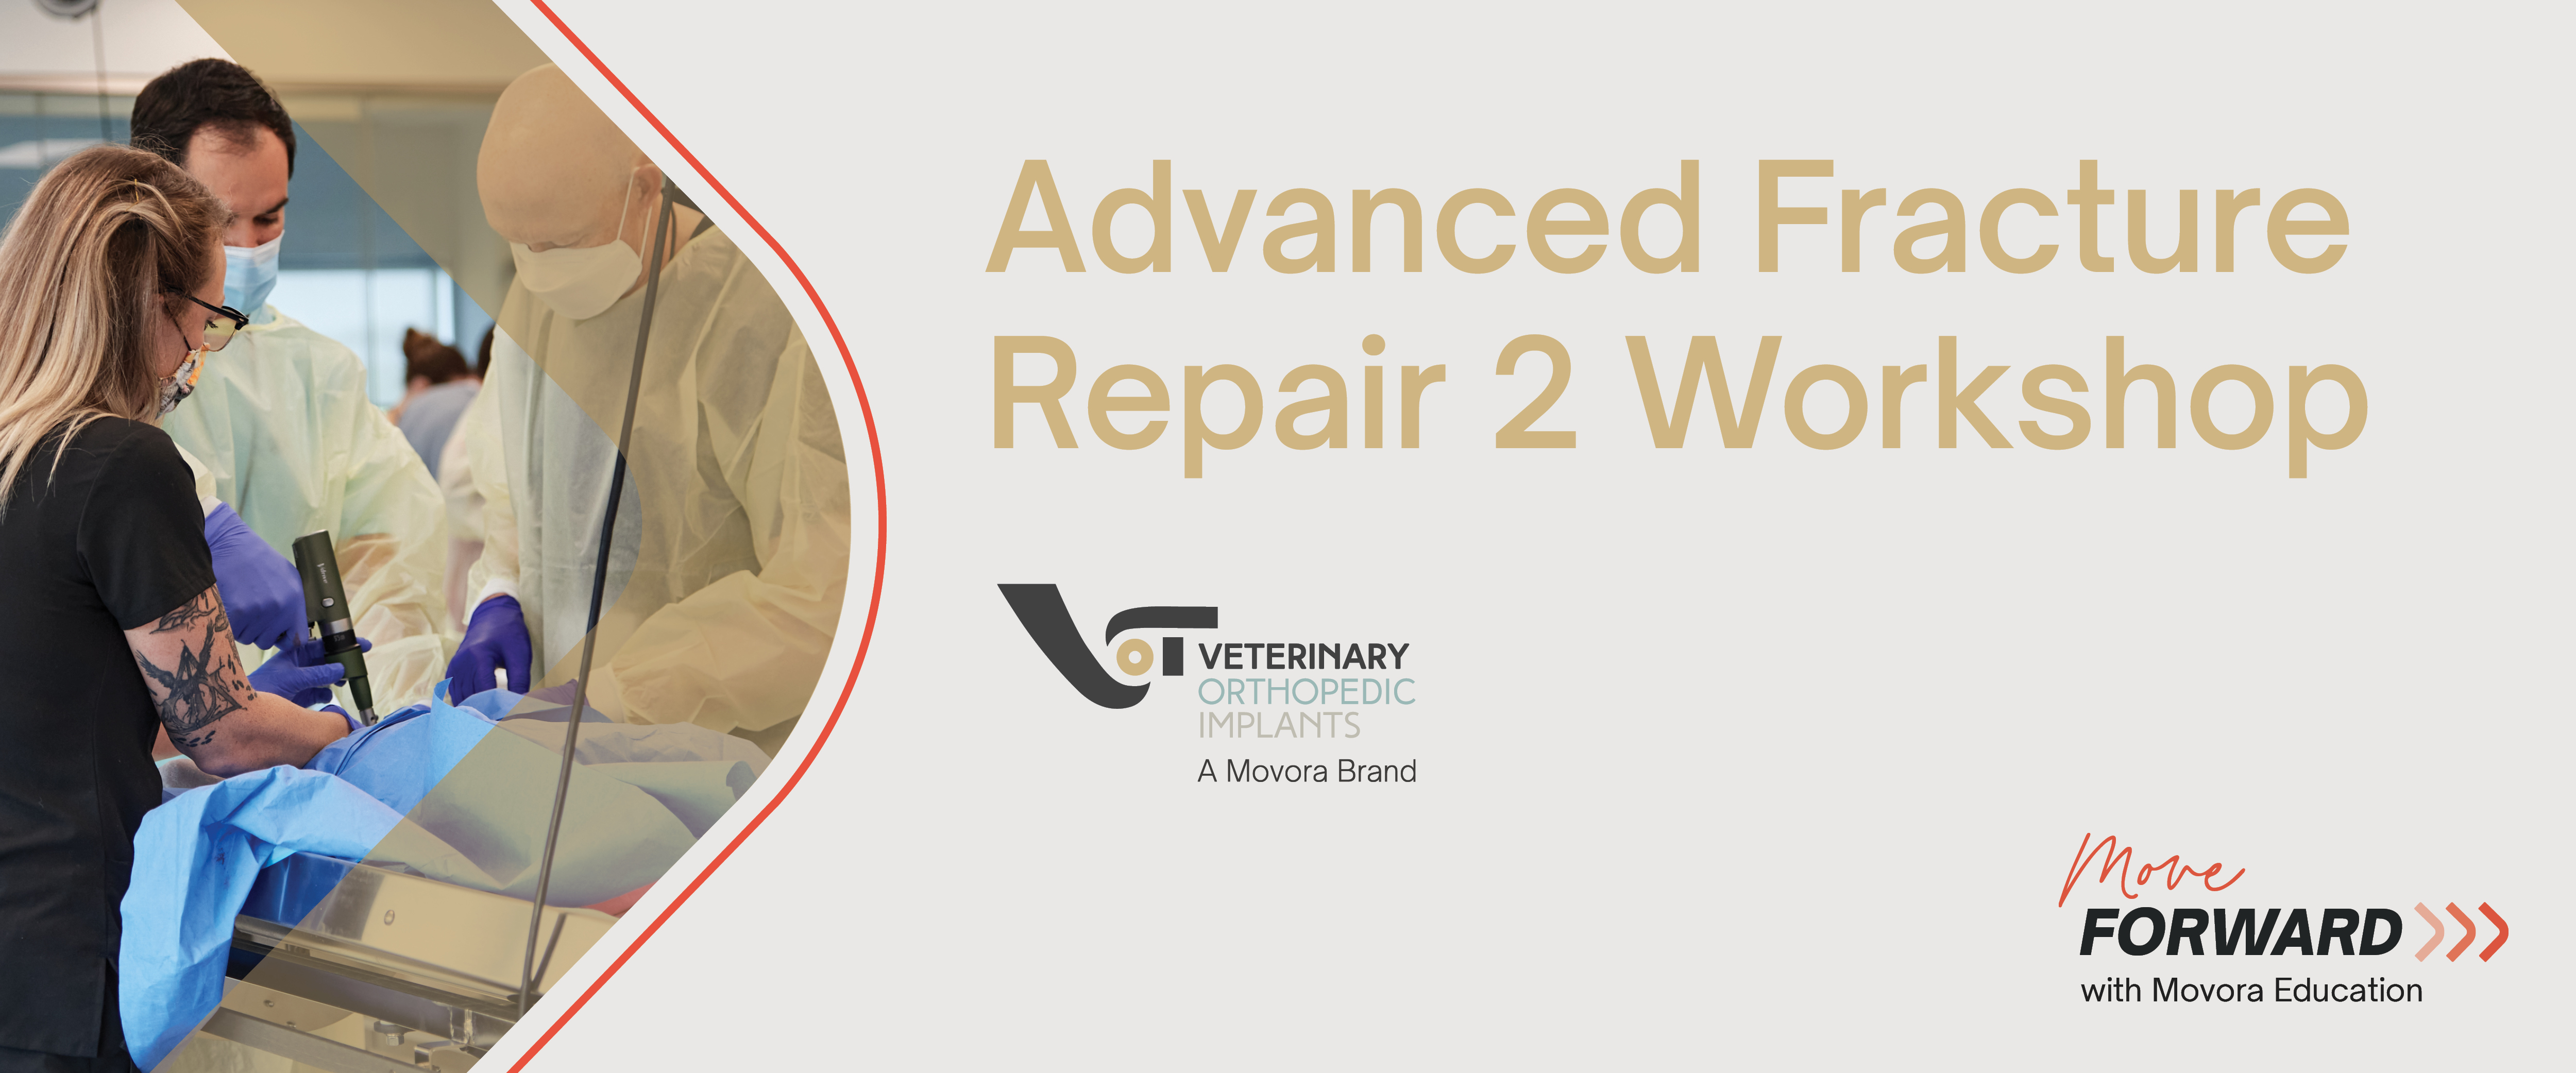 Advanced Fracture Repair 2 Workshop banner